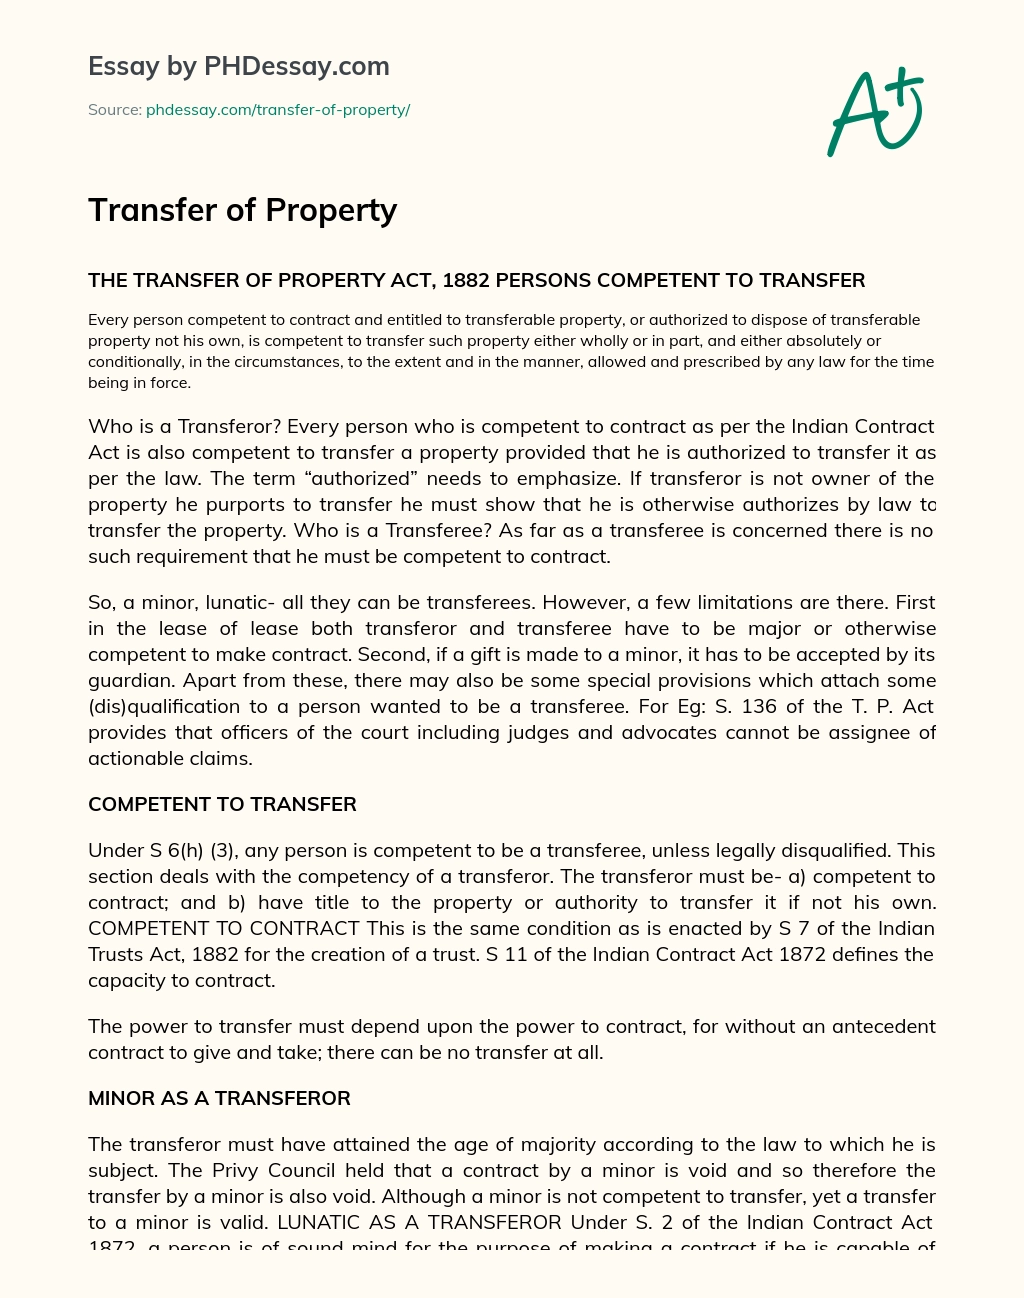 Transfer of Property essay